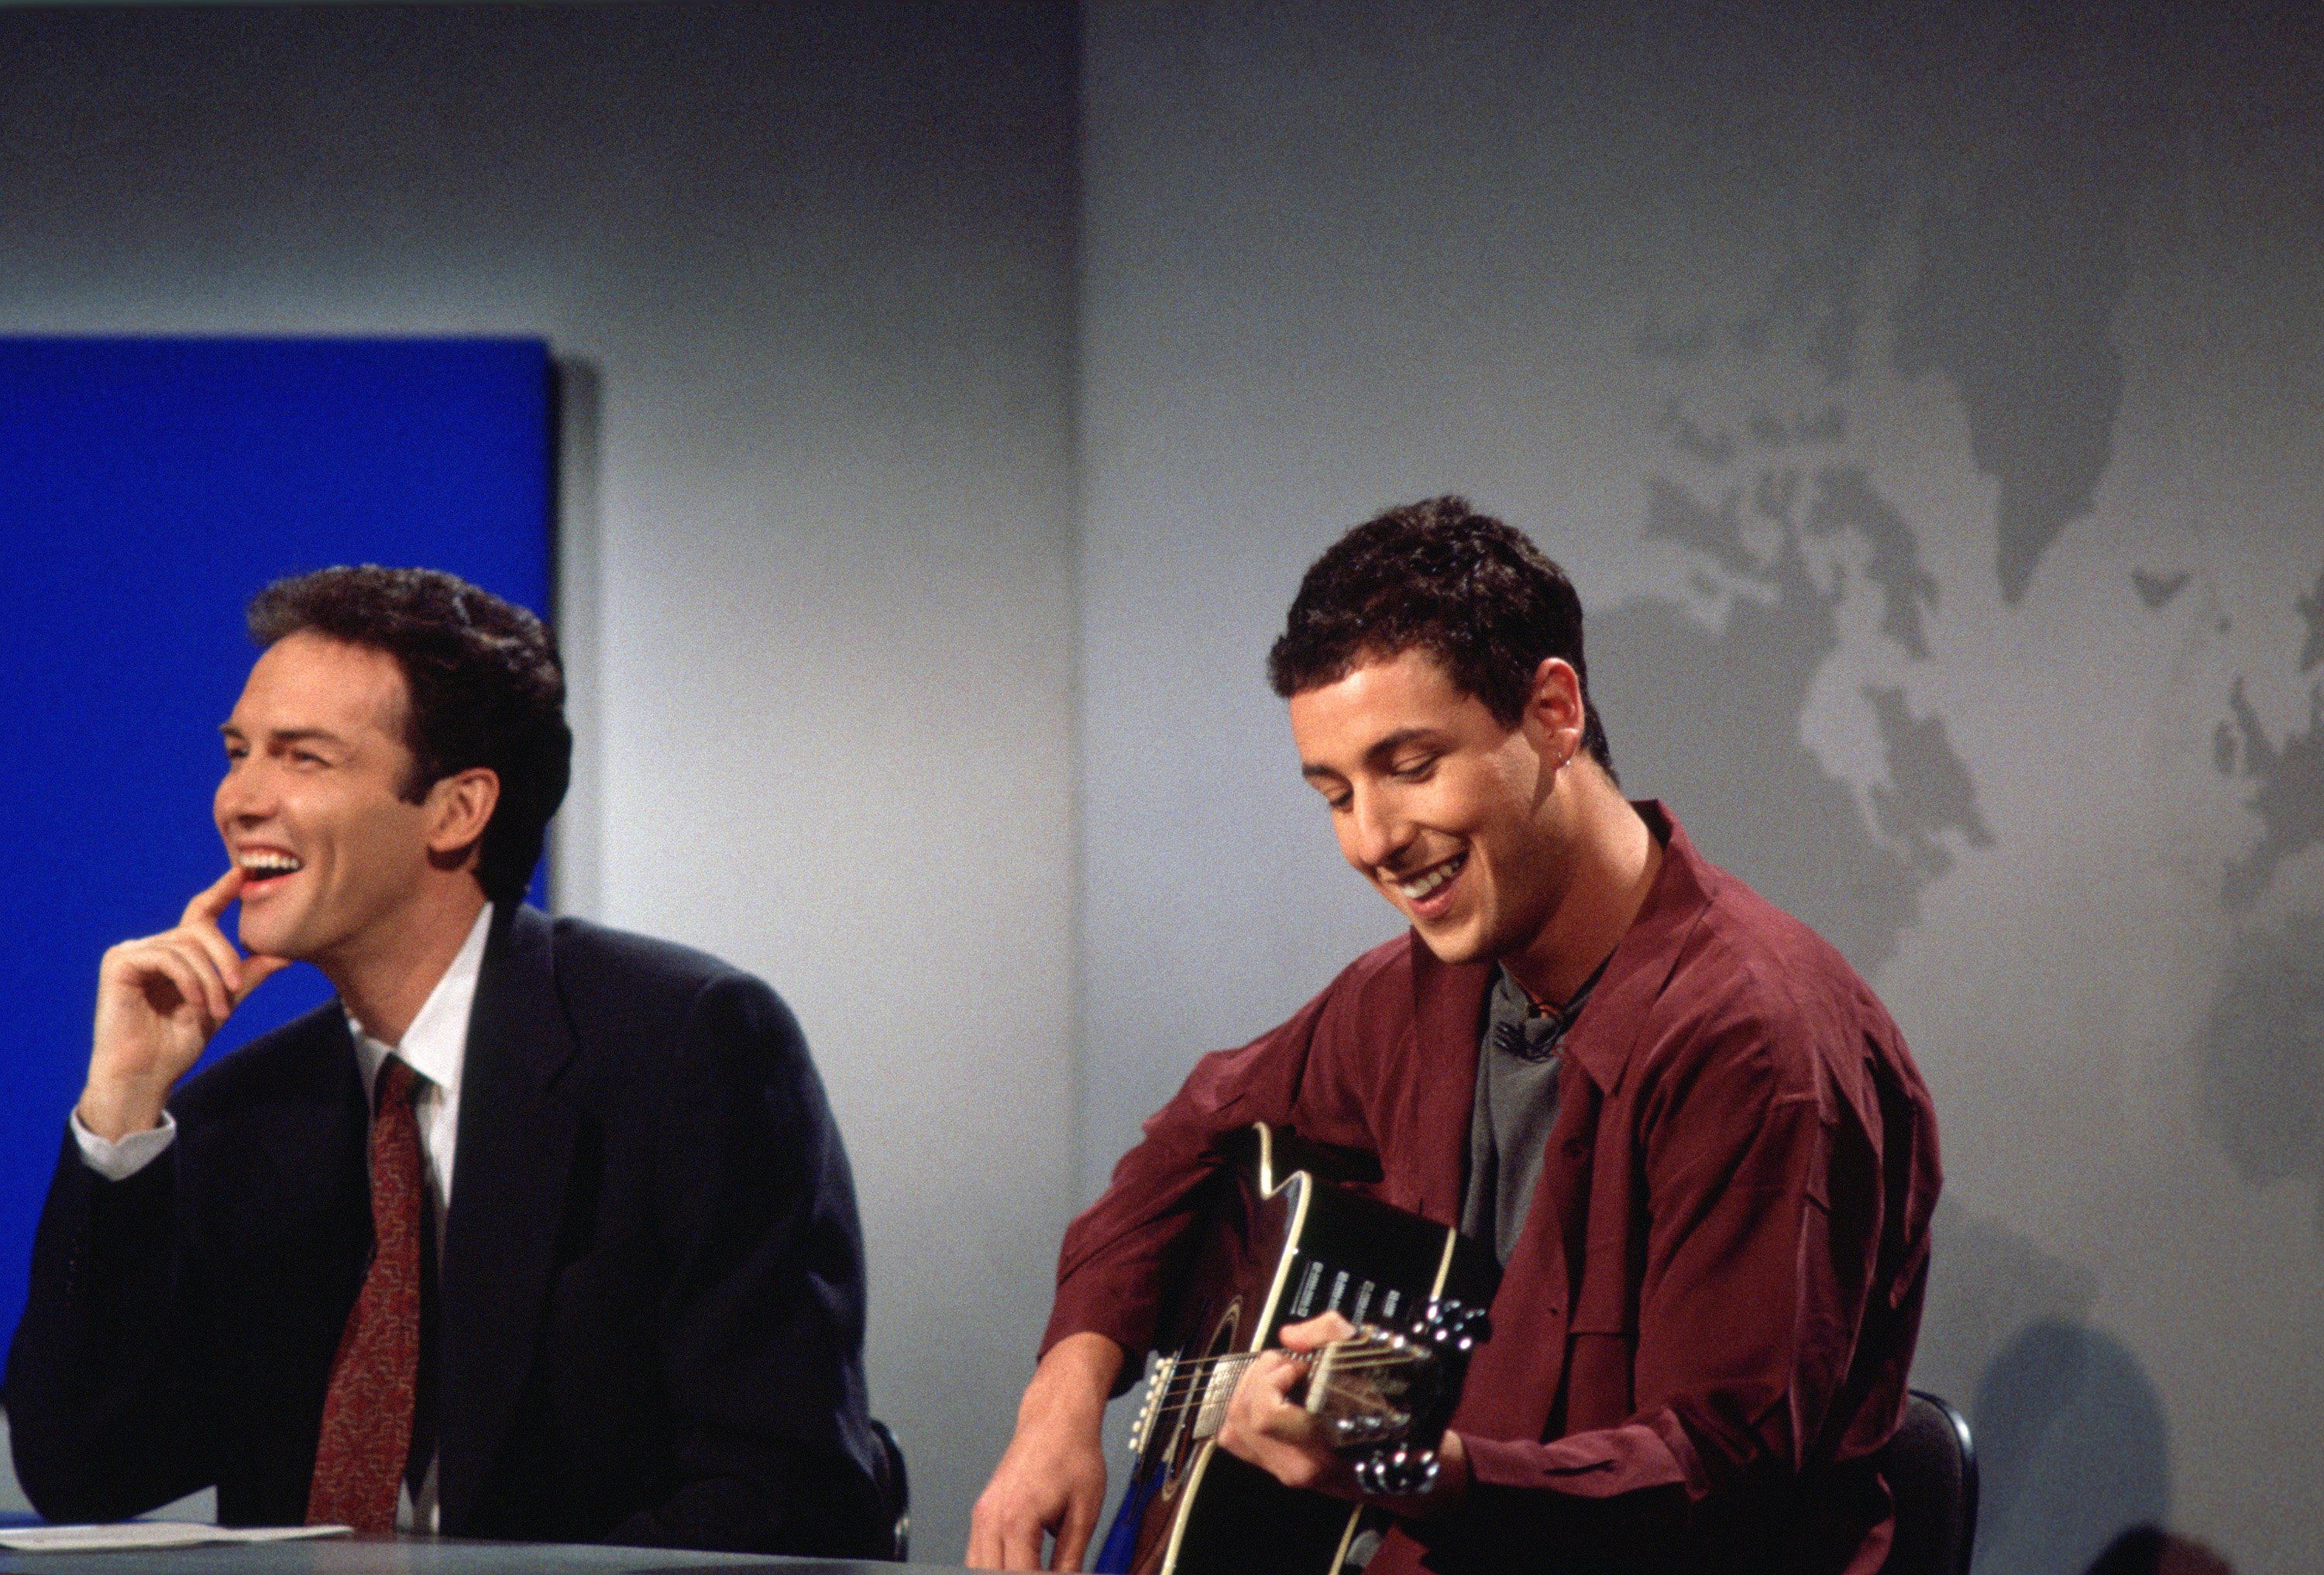 Norm Macdonald laughs while Adam Sandler plays guitar